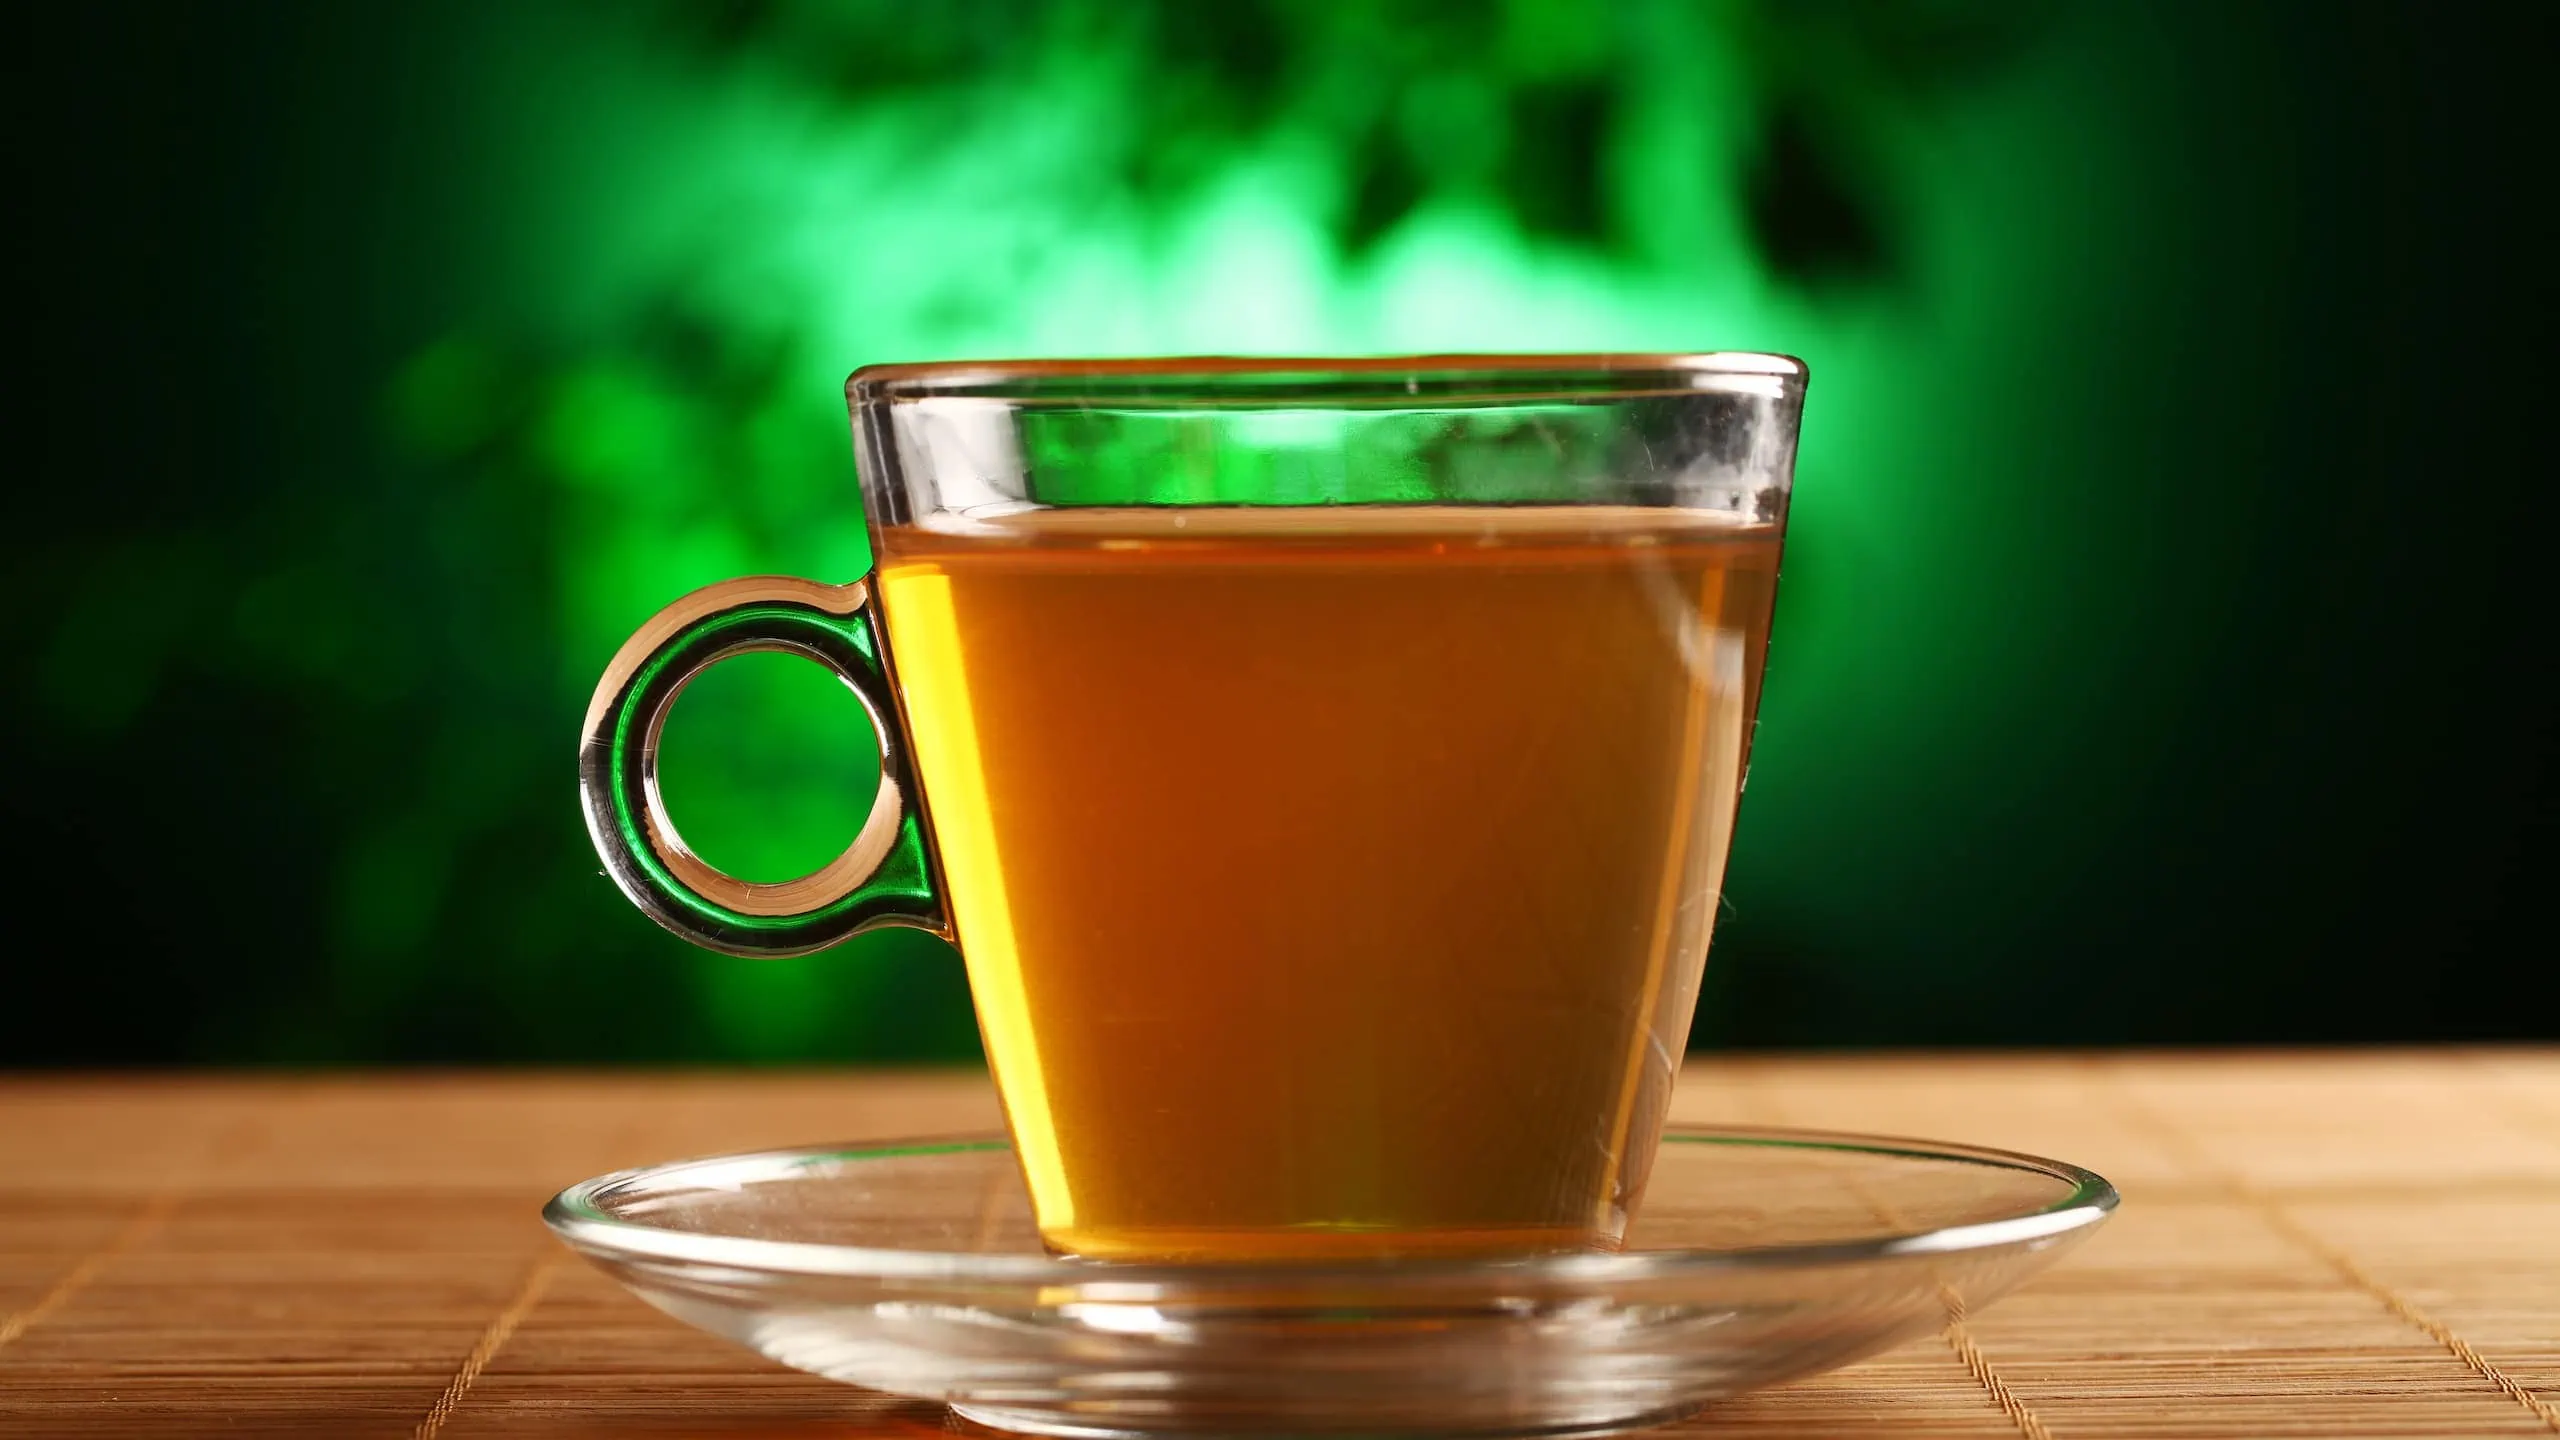 A refreshing cup of Herbalife tea recipe